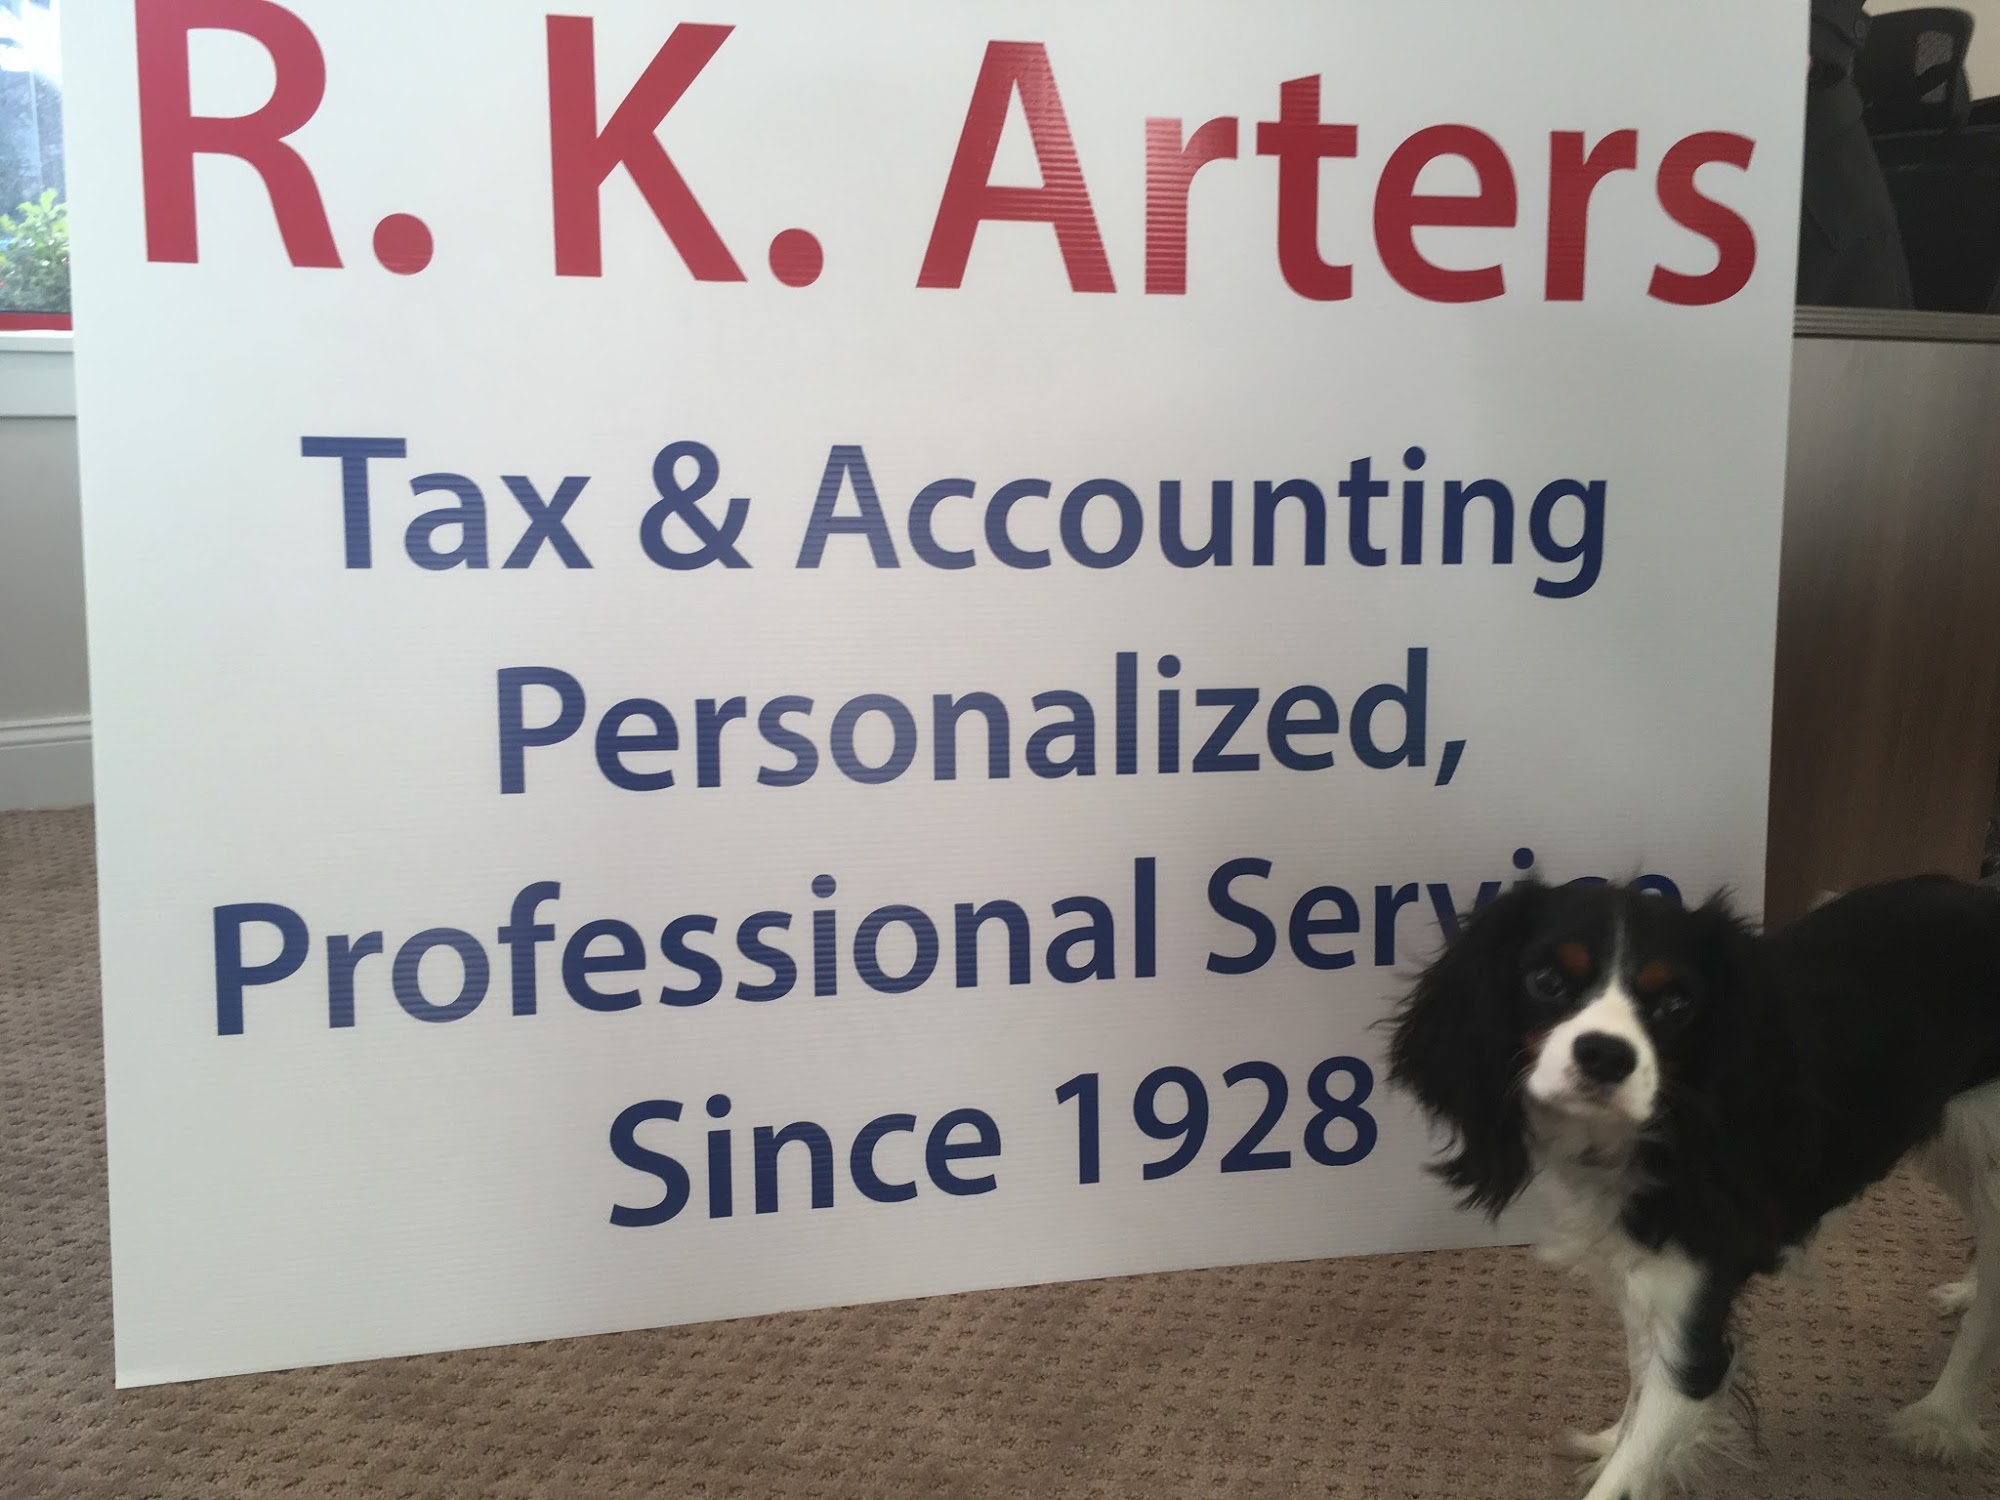 RK Arters Tax & Accounting